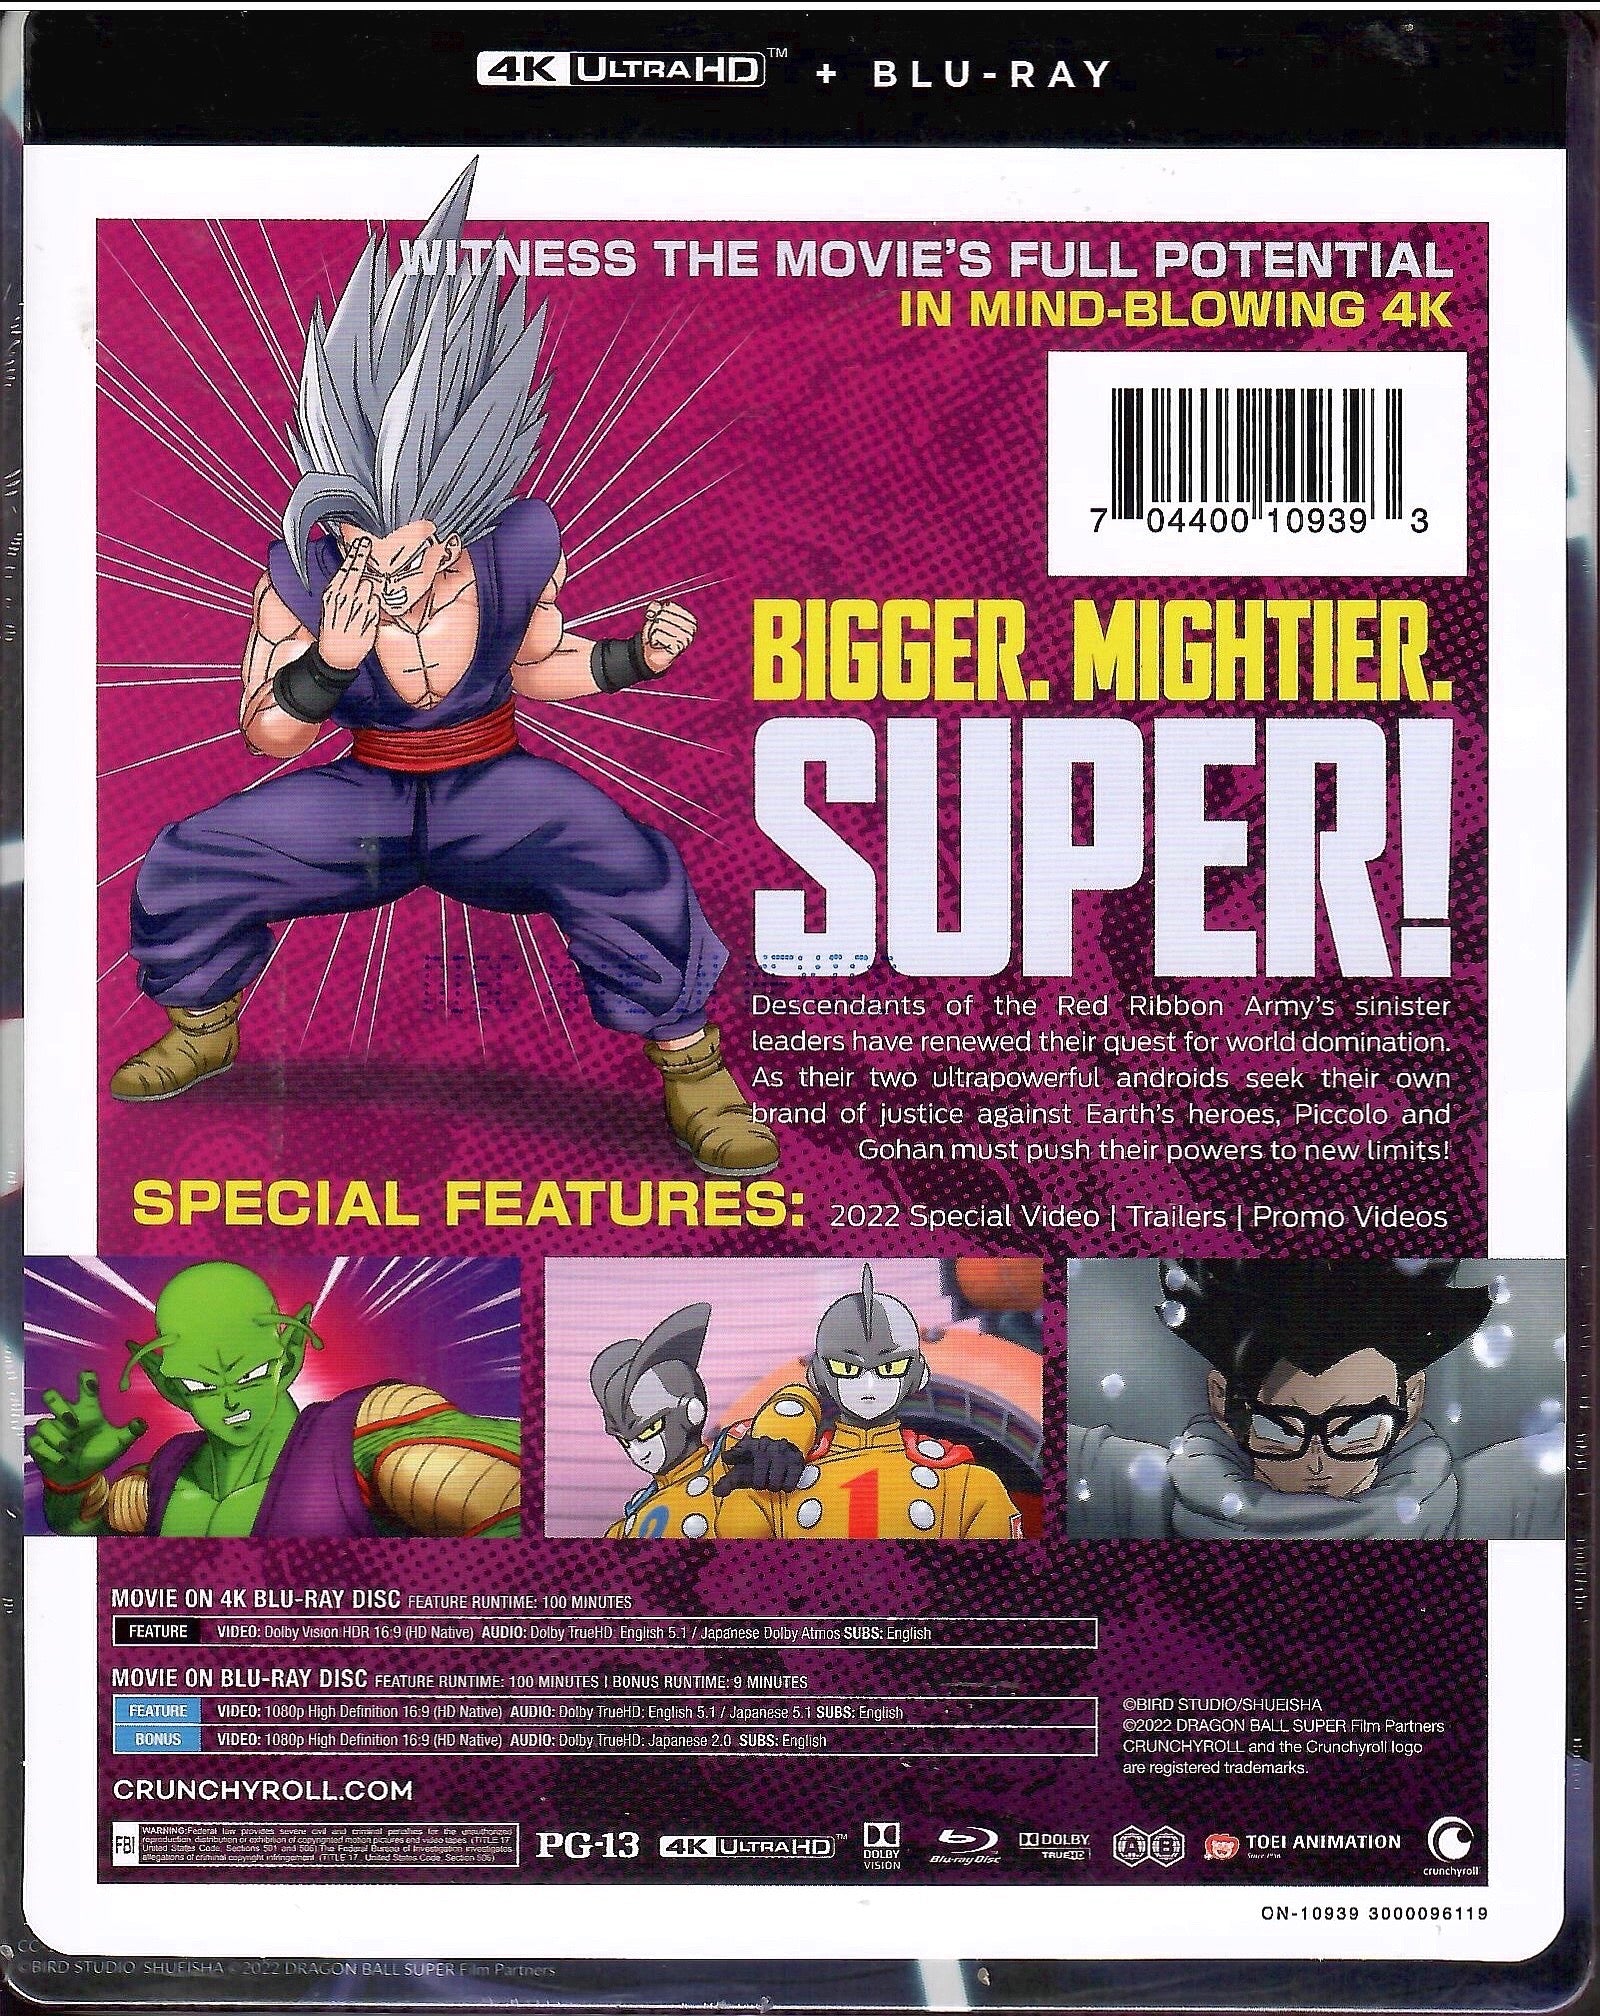 Crunchyroll 'Dragon Ball Super: Super Hero' Worldwide Release